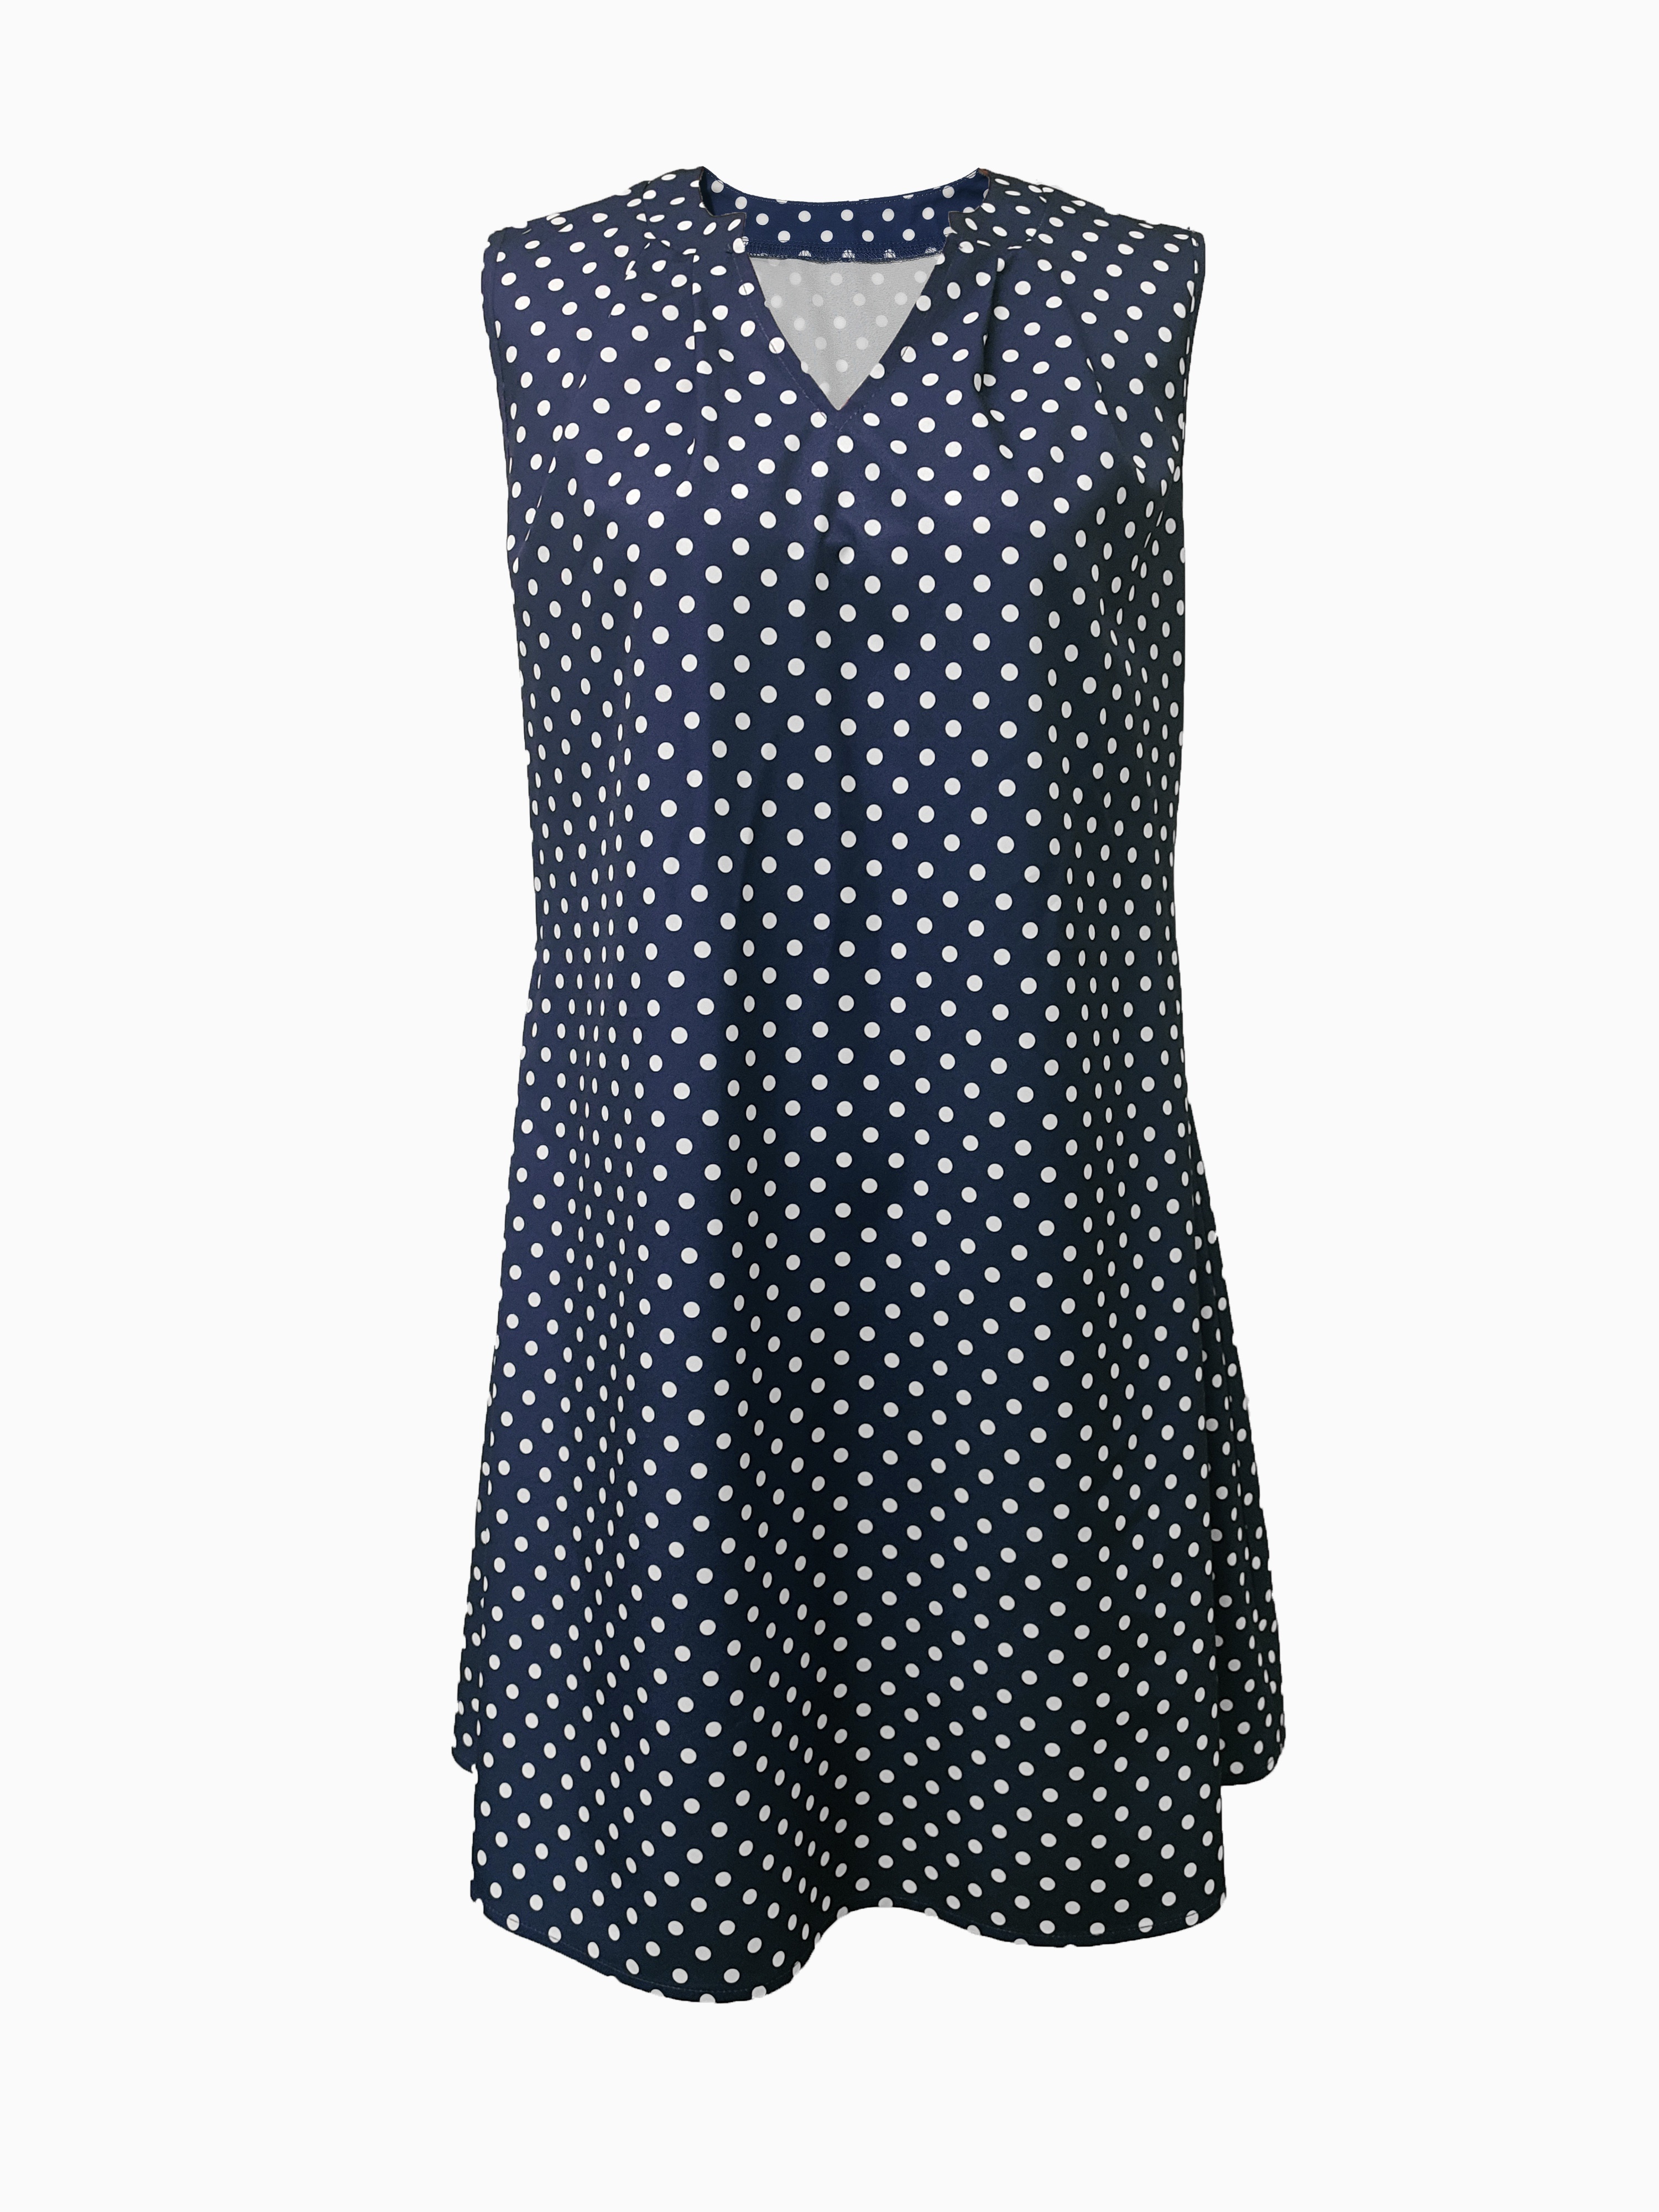 abstract ripple print dress casual v neck sleeveless dress womens clothing details 7